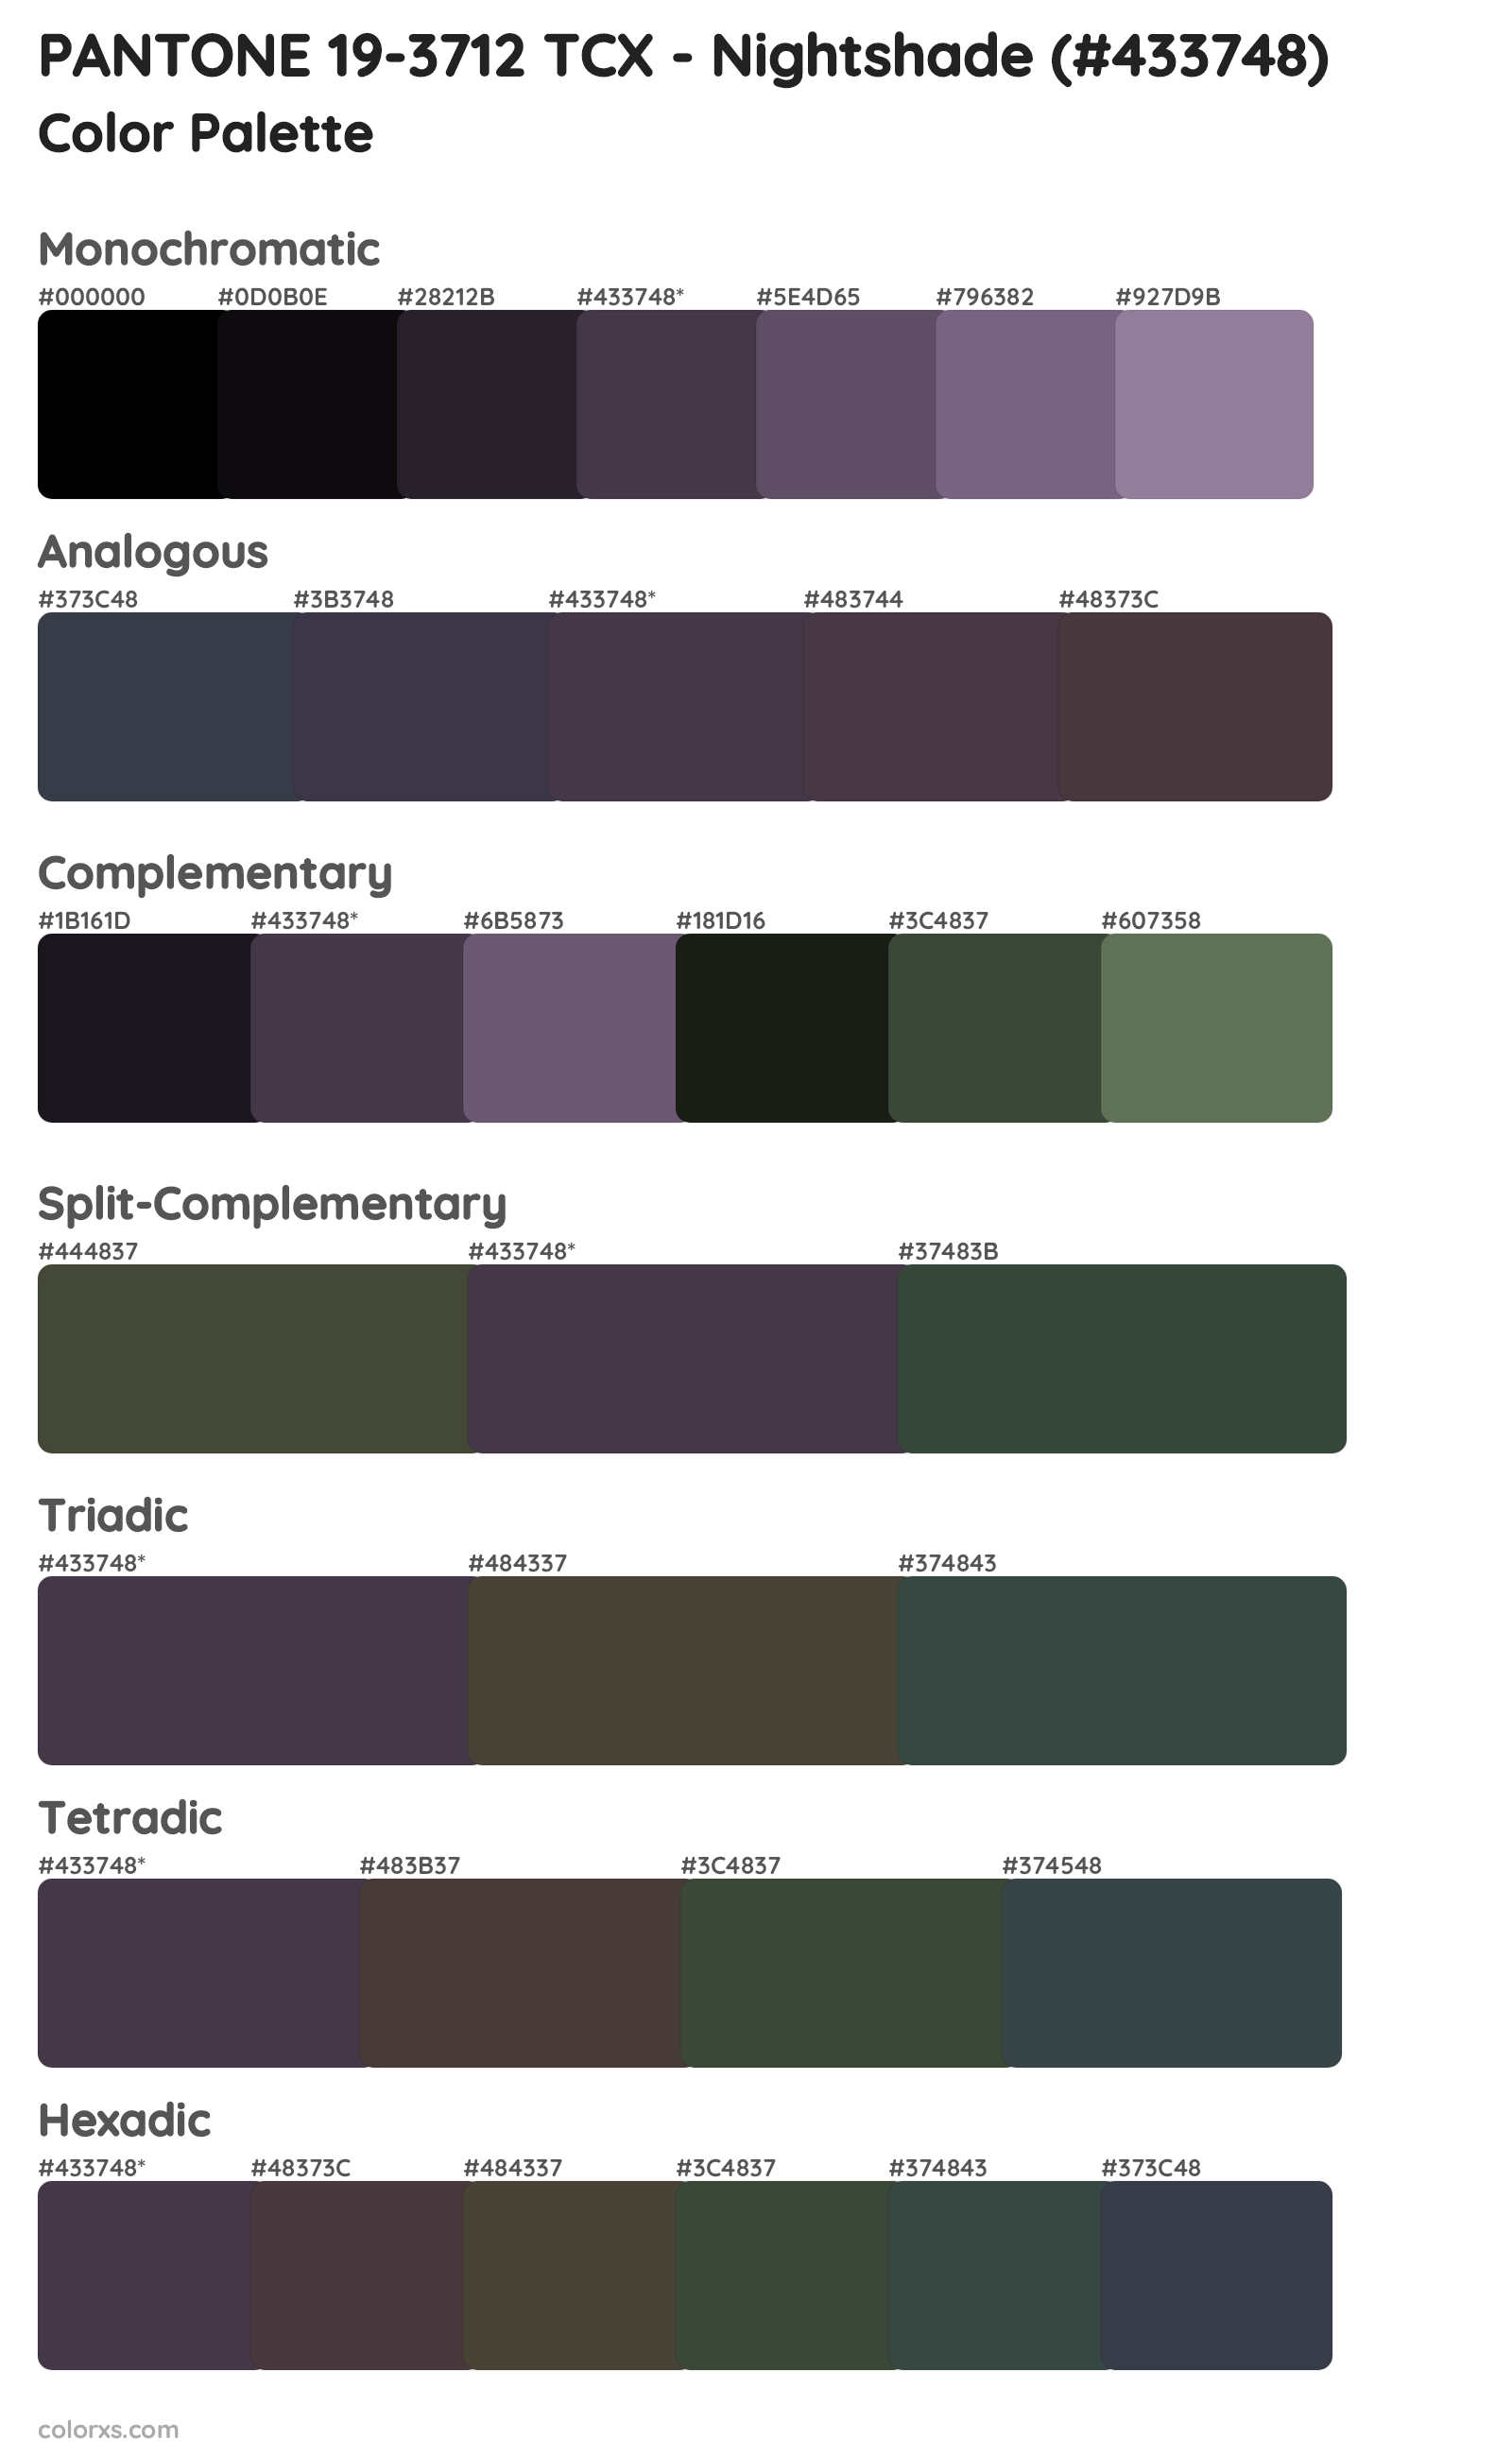 PANTONE 19-3712 TCX - Nightshade Color Scheme Palettes